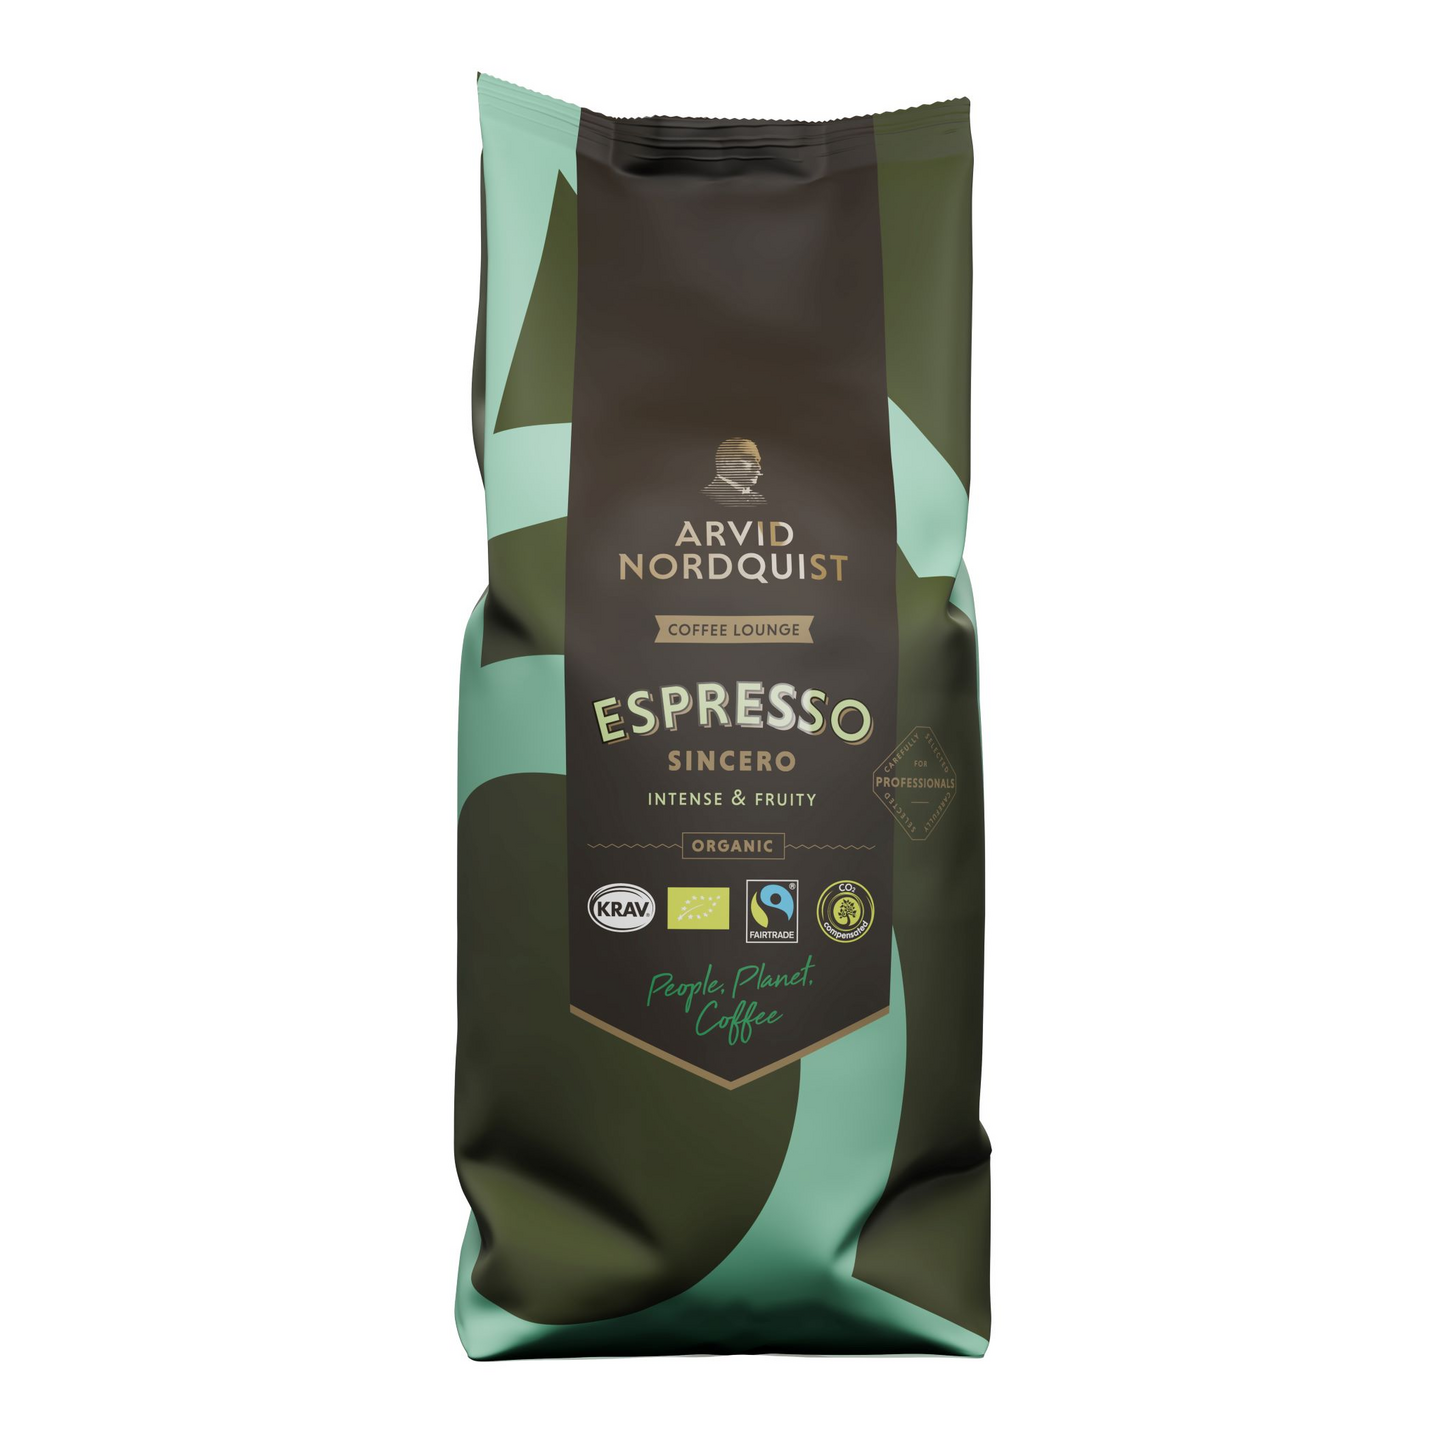 Arvid Nordquist Sincero Espresso kahvipapuja espressopaahto 1000g luomu Reilu kauppa